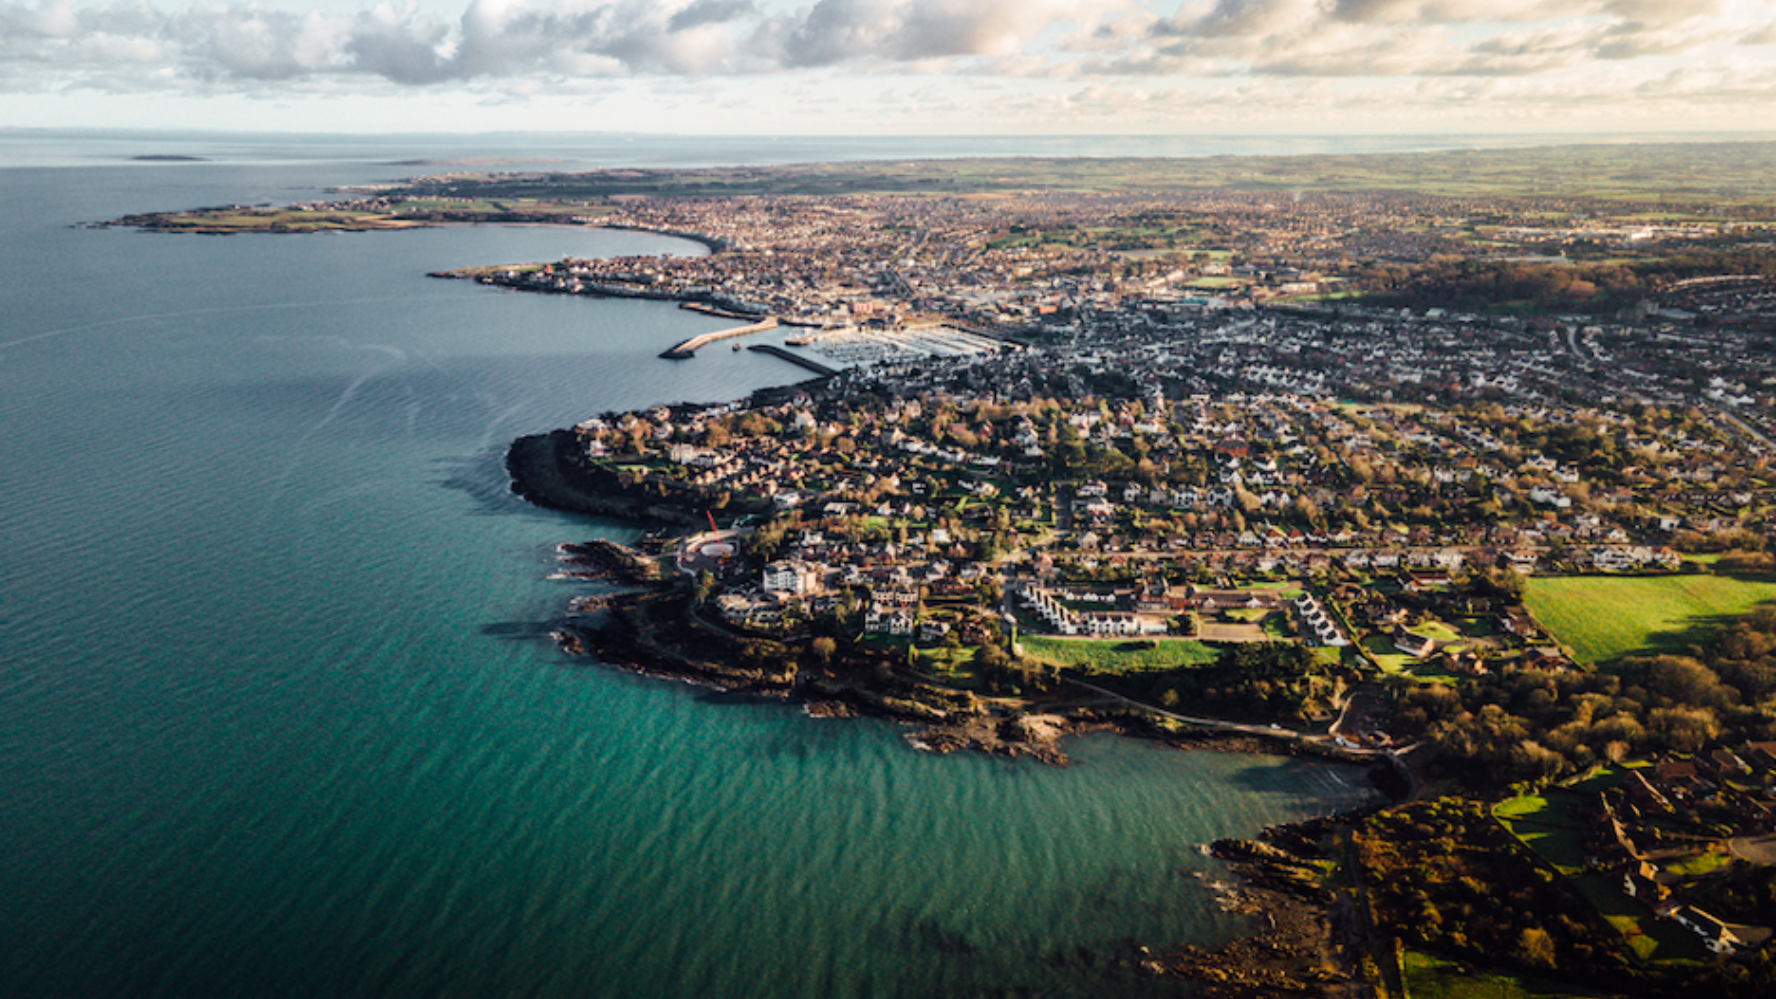 Aerial view of the Northern Irish coast